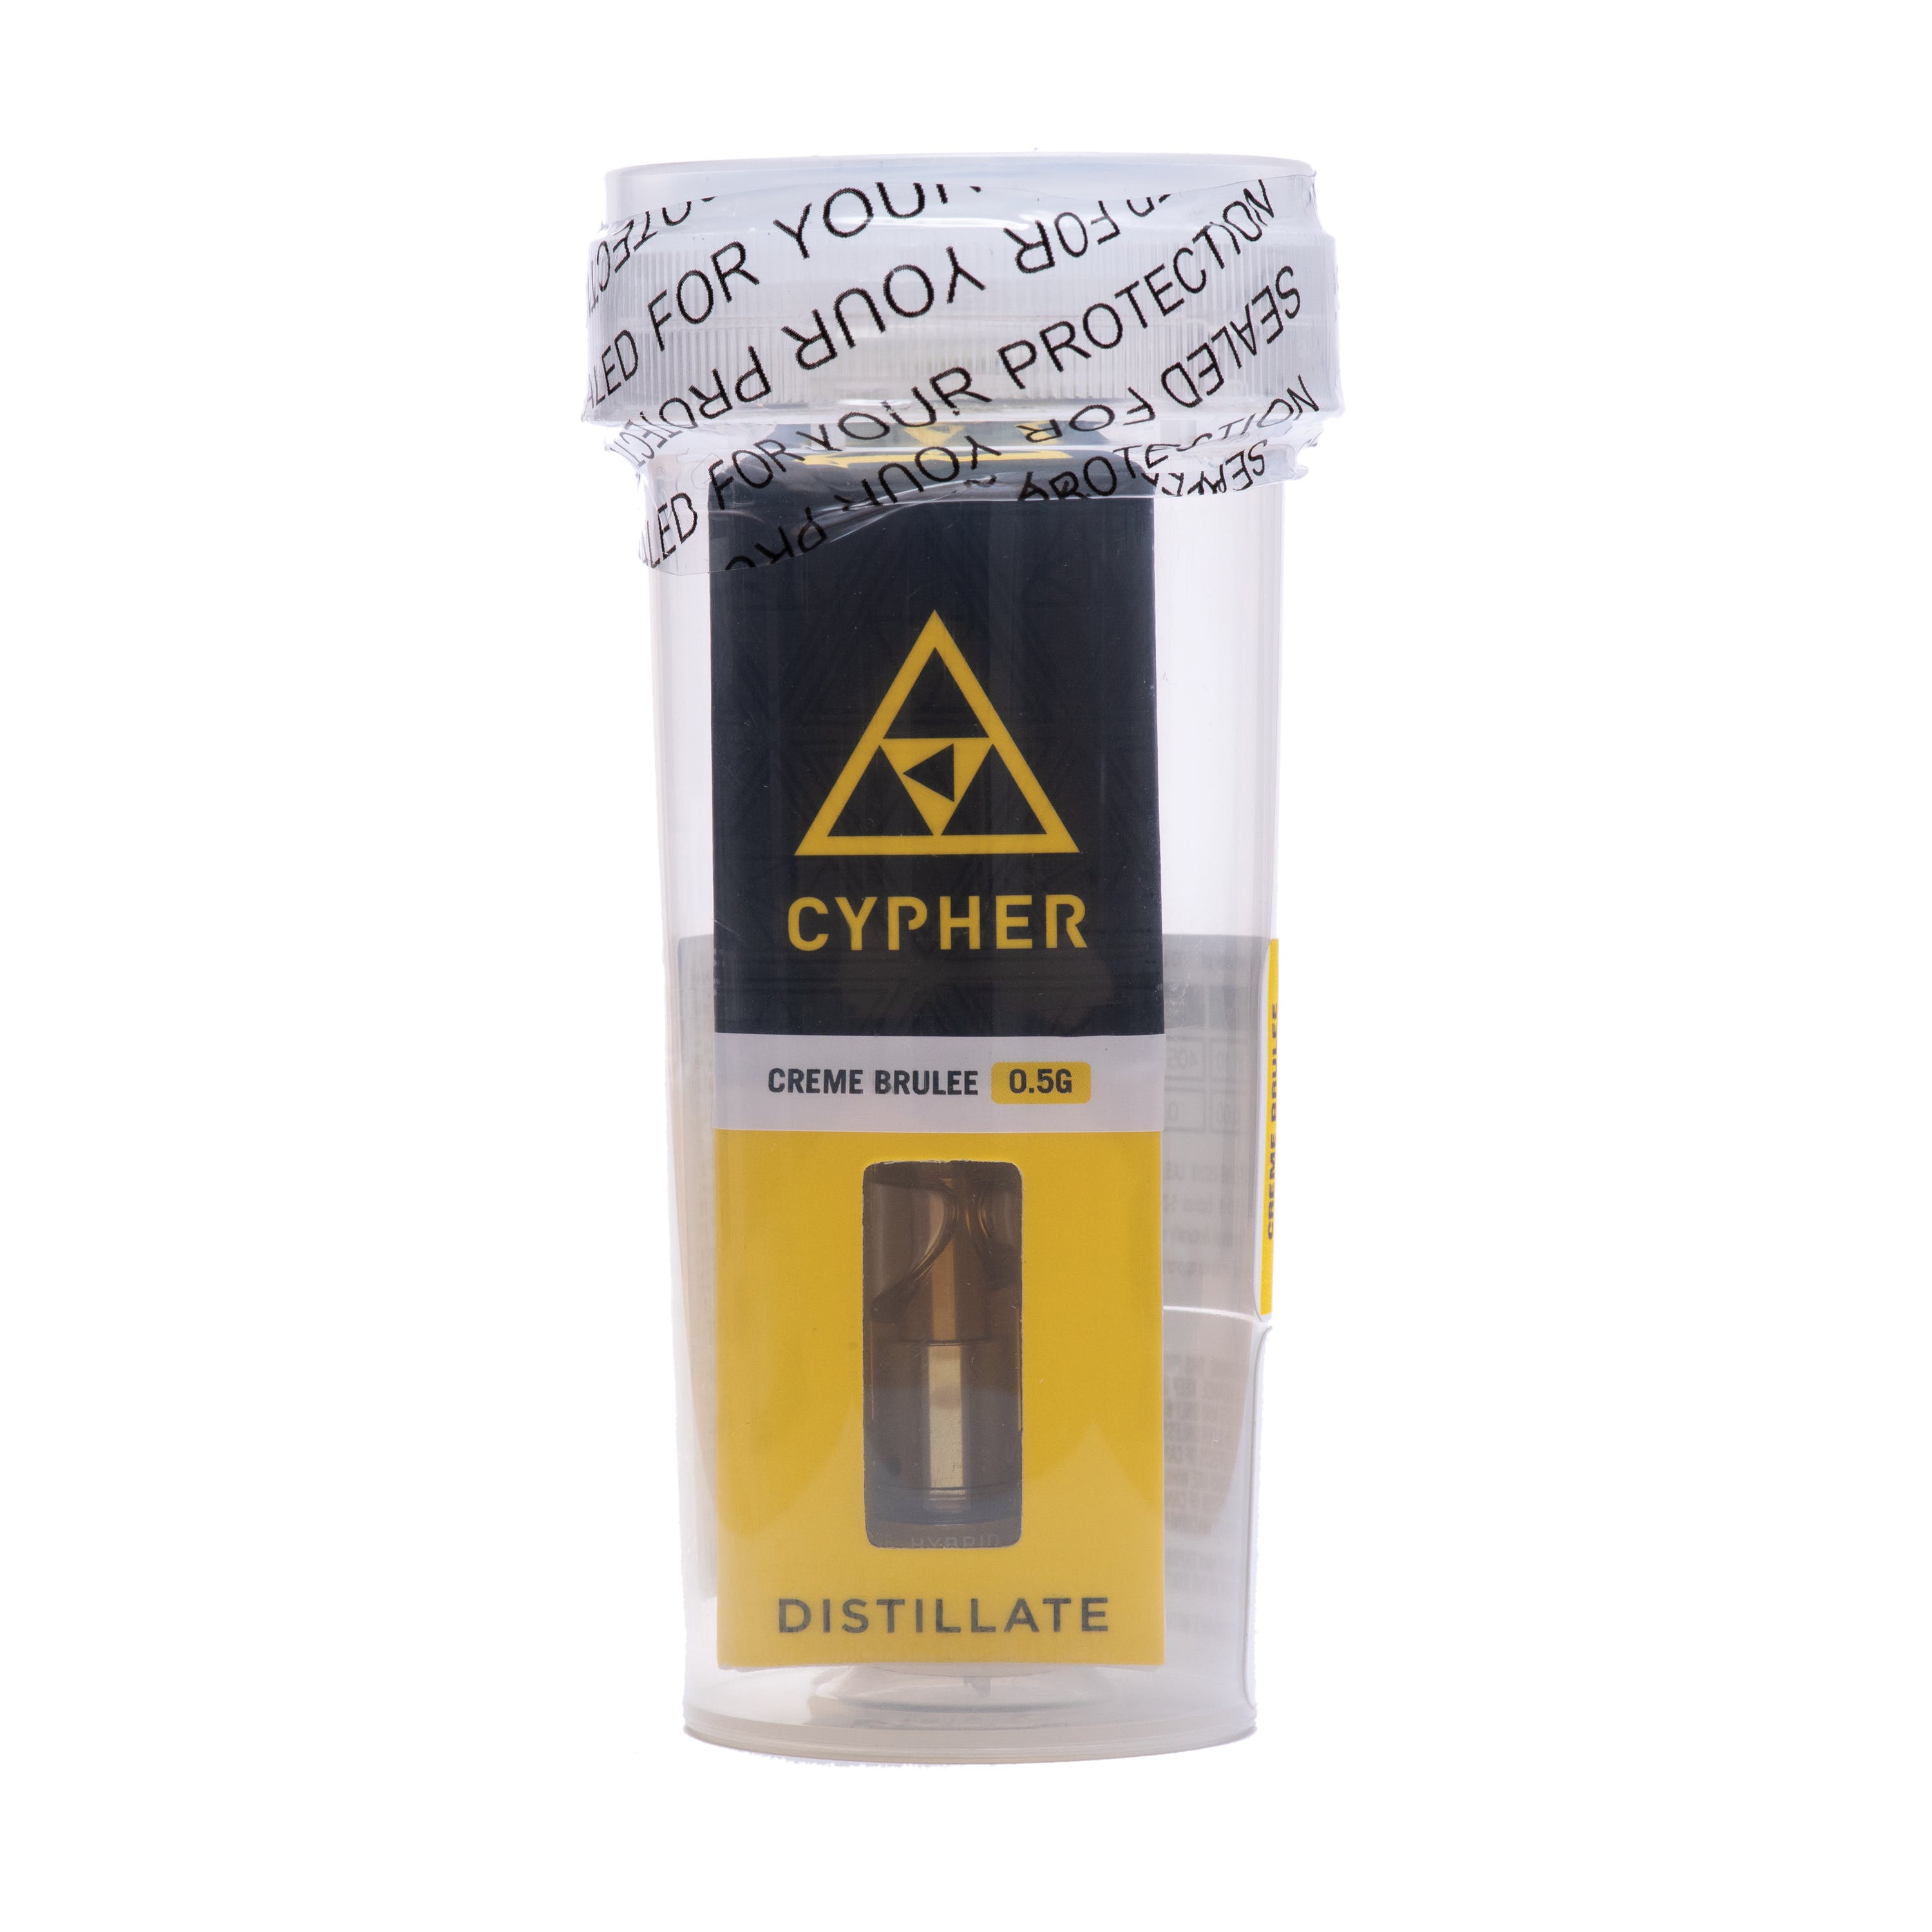 *Medical/Online(21+)* Creme Brulee (Hybrid) Cartridge by Cypher